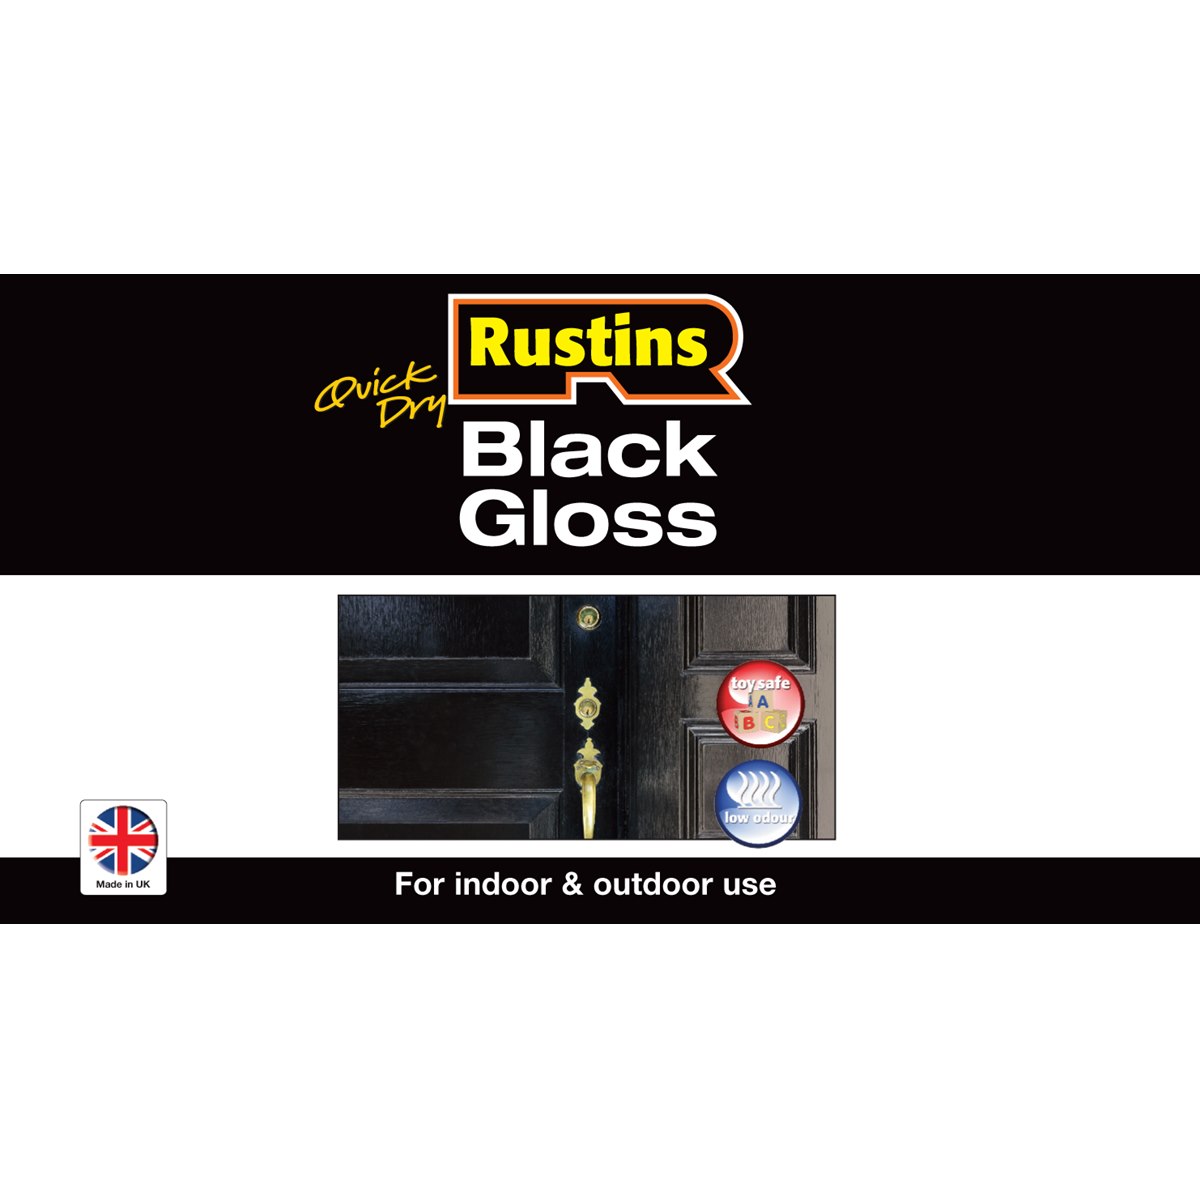 Rustins Quick Dry Black Gloss Paint